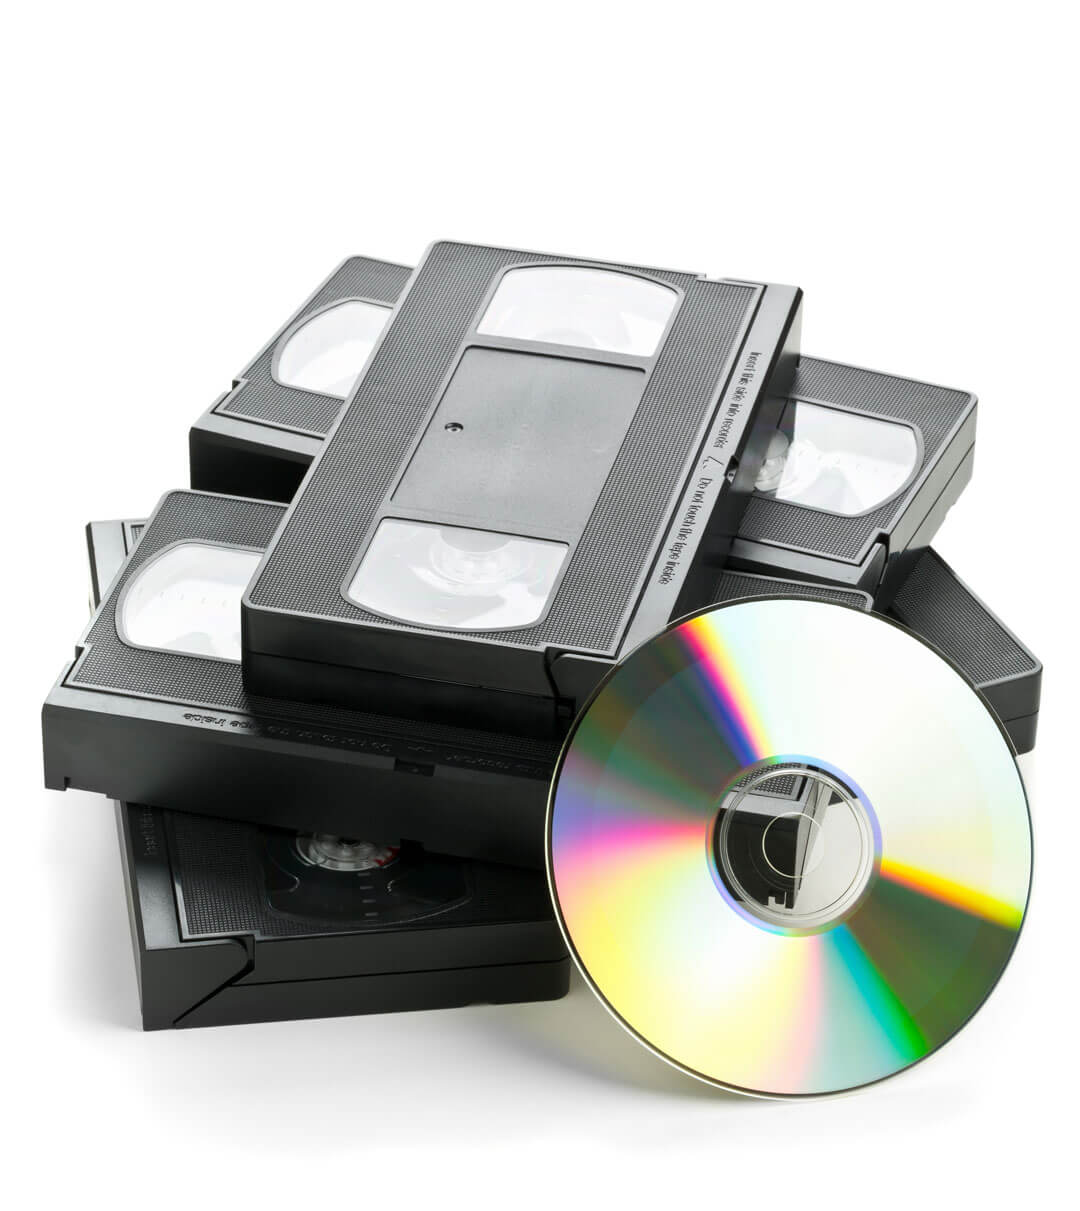 Convert VHS To Digital Service